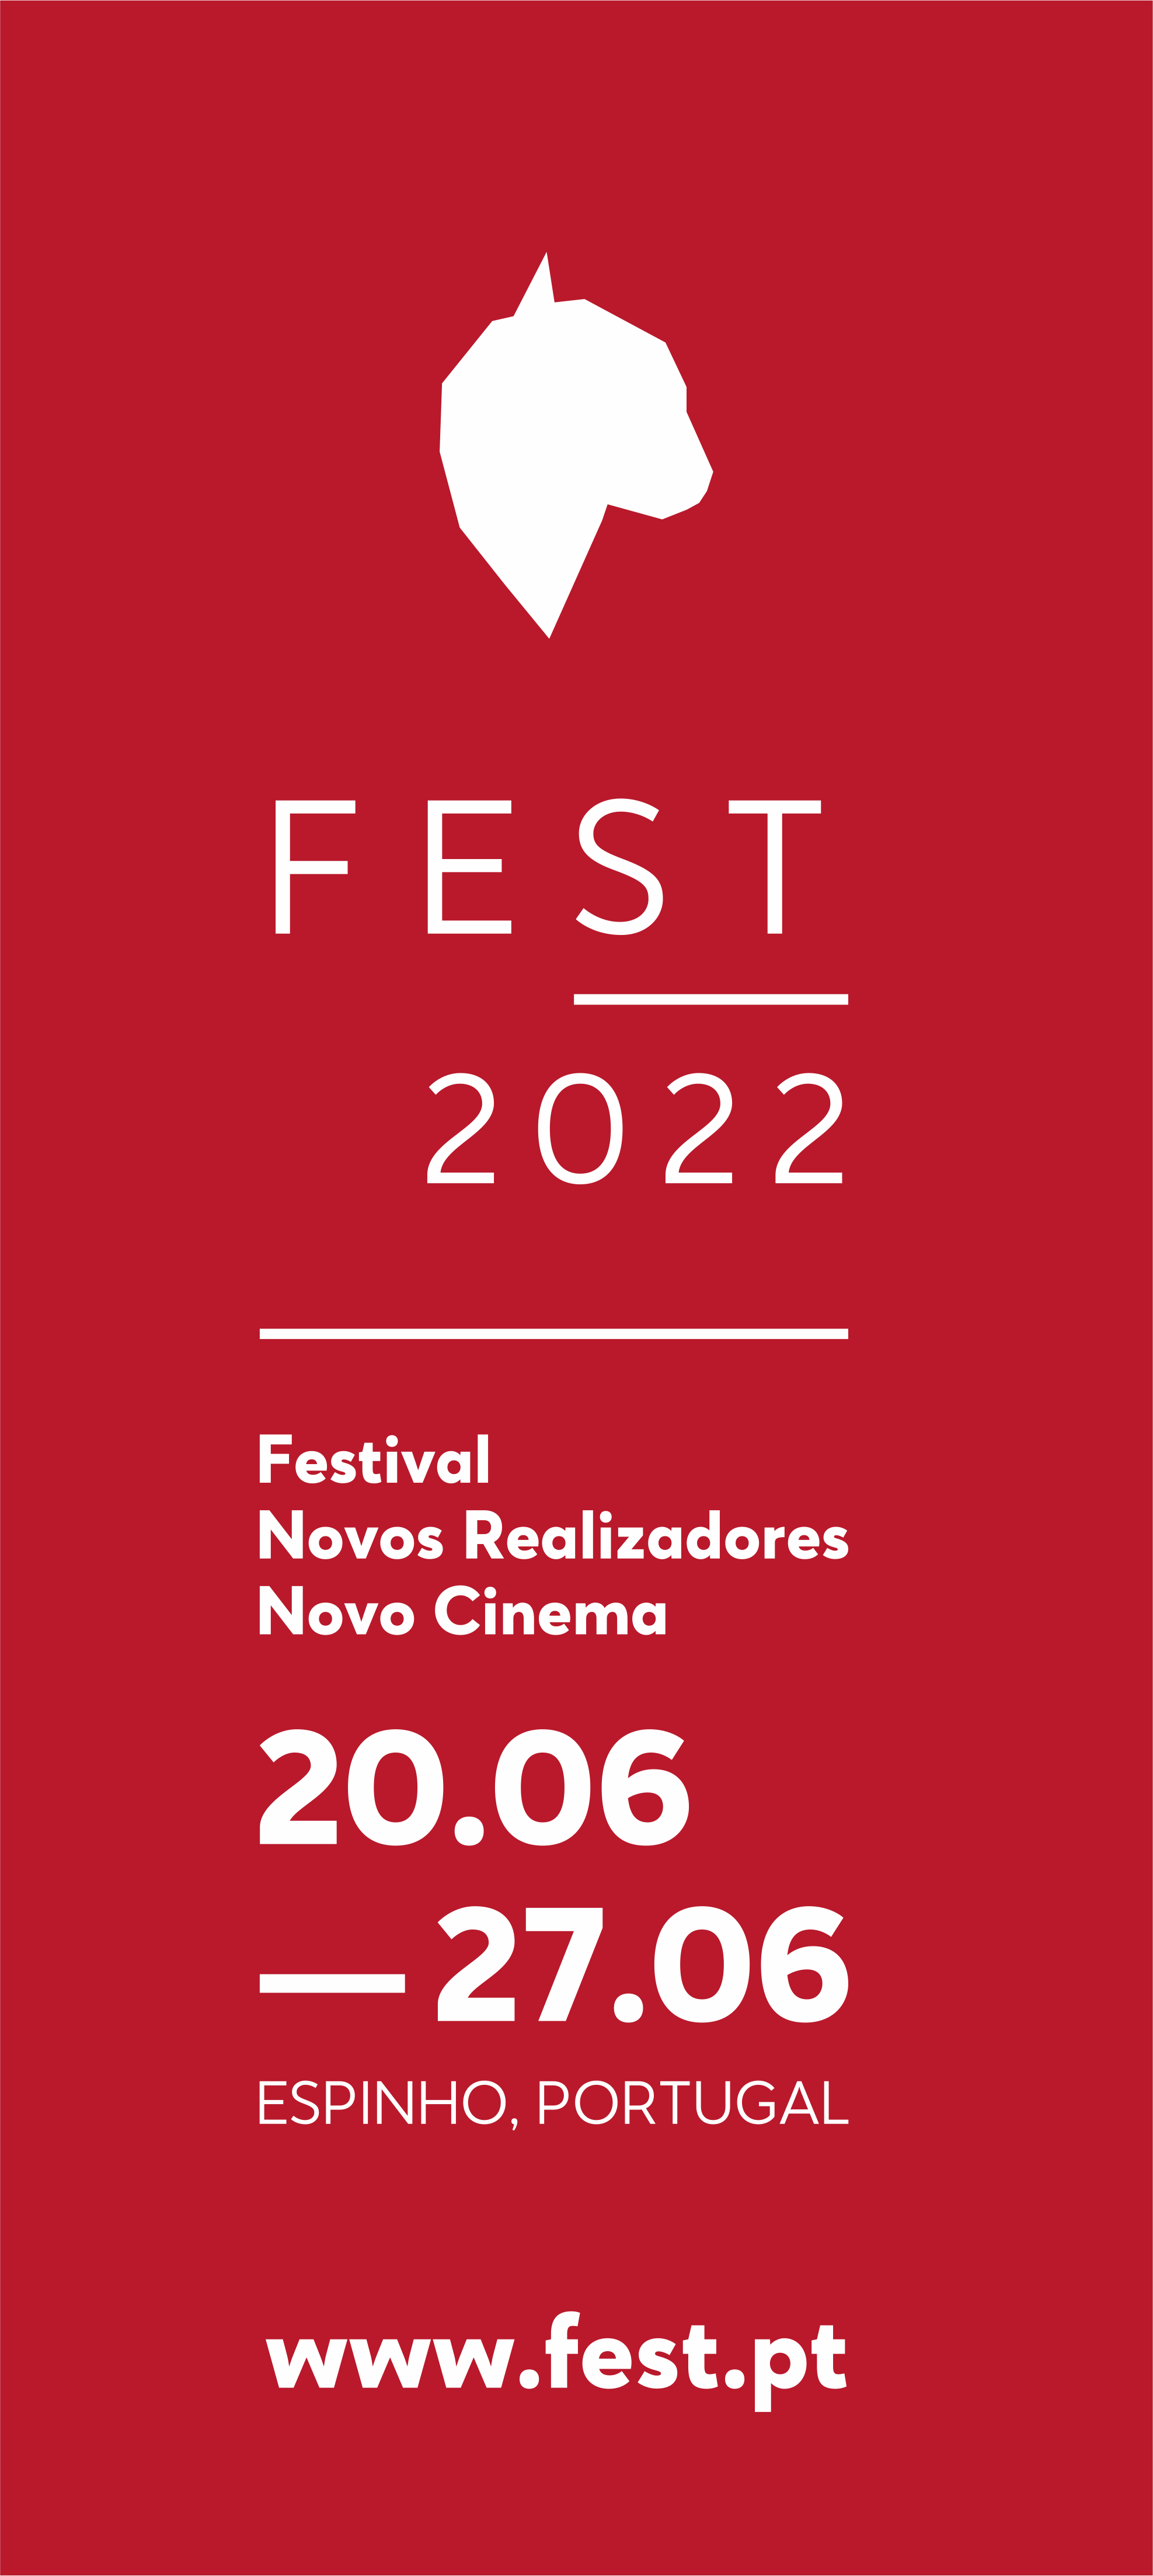 FEST_LOGO_BARRA_RED_PT_RGB_2022